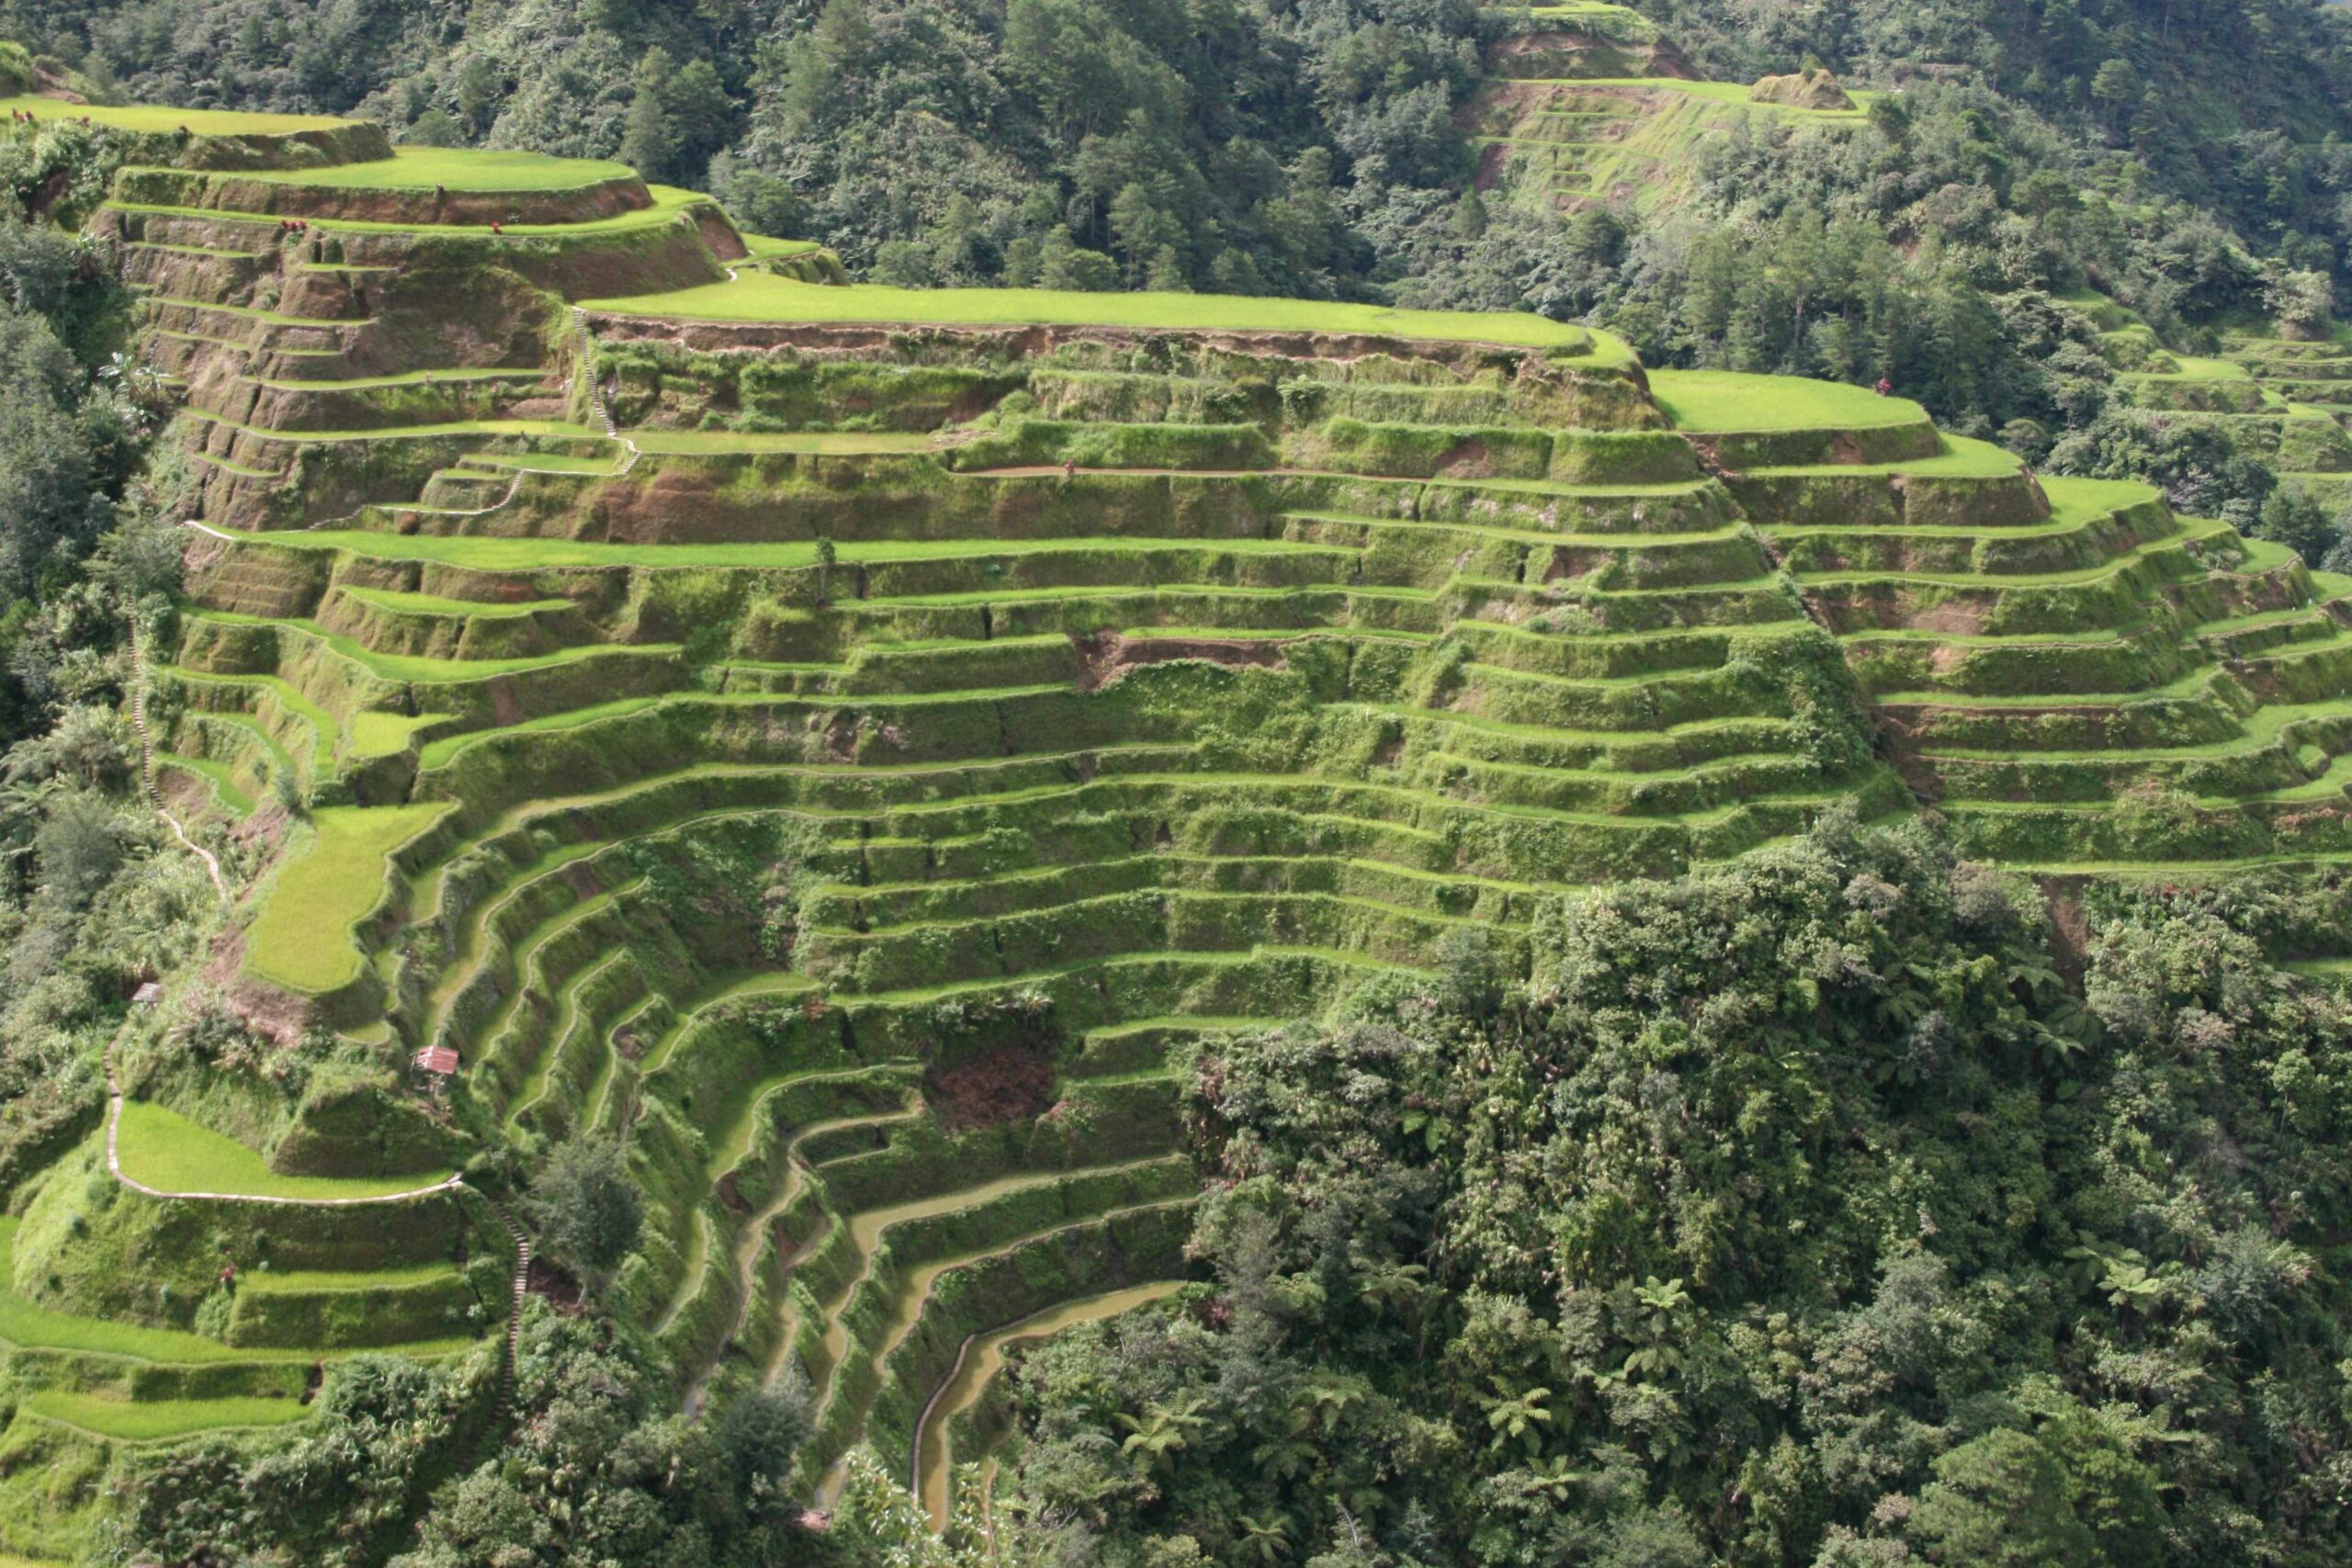 Banaue Rice Terraces, N. Luzon, Philippines